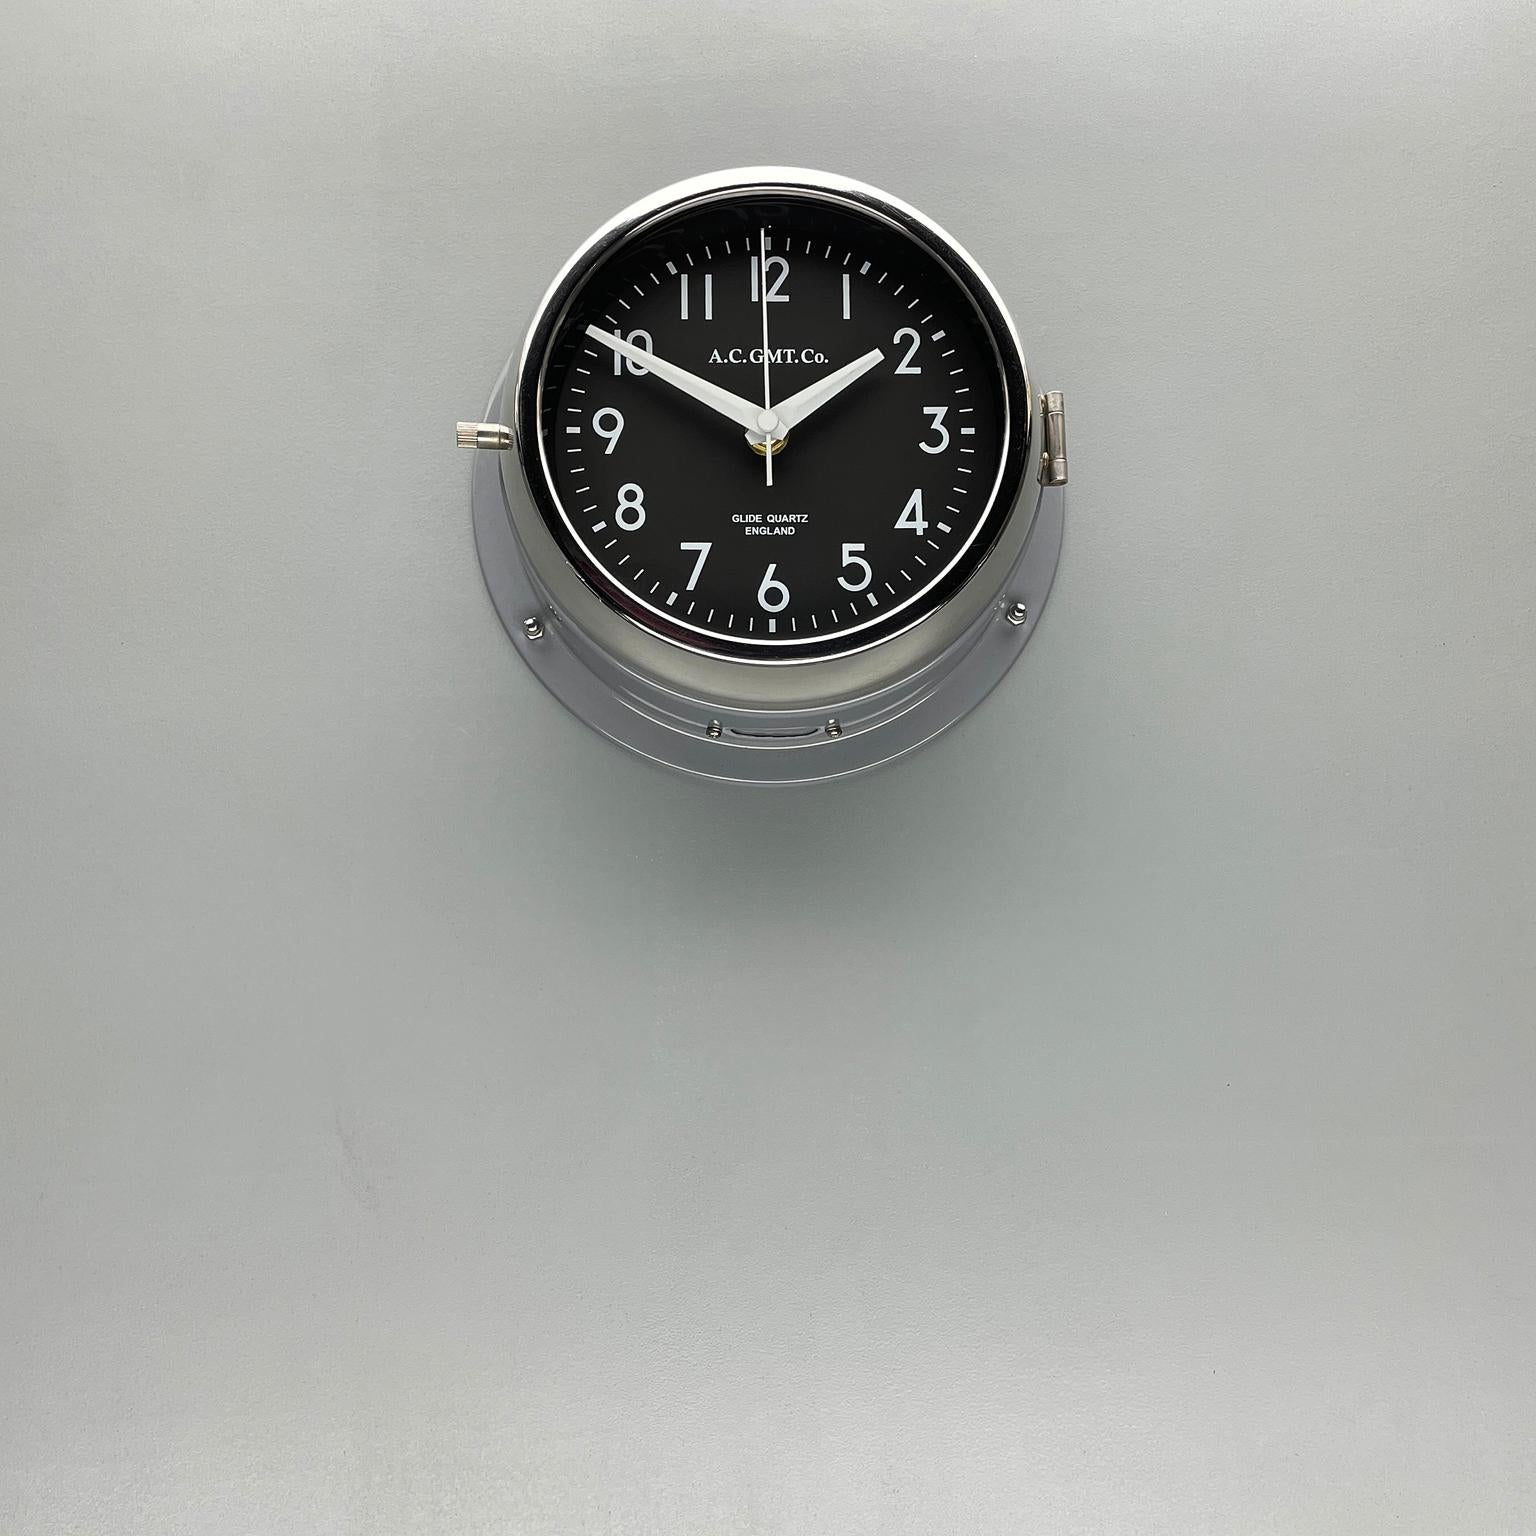 1970's British Ultimate Gray /Monochrome Black AC GMT Co. Classic Wall Clock 9